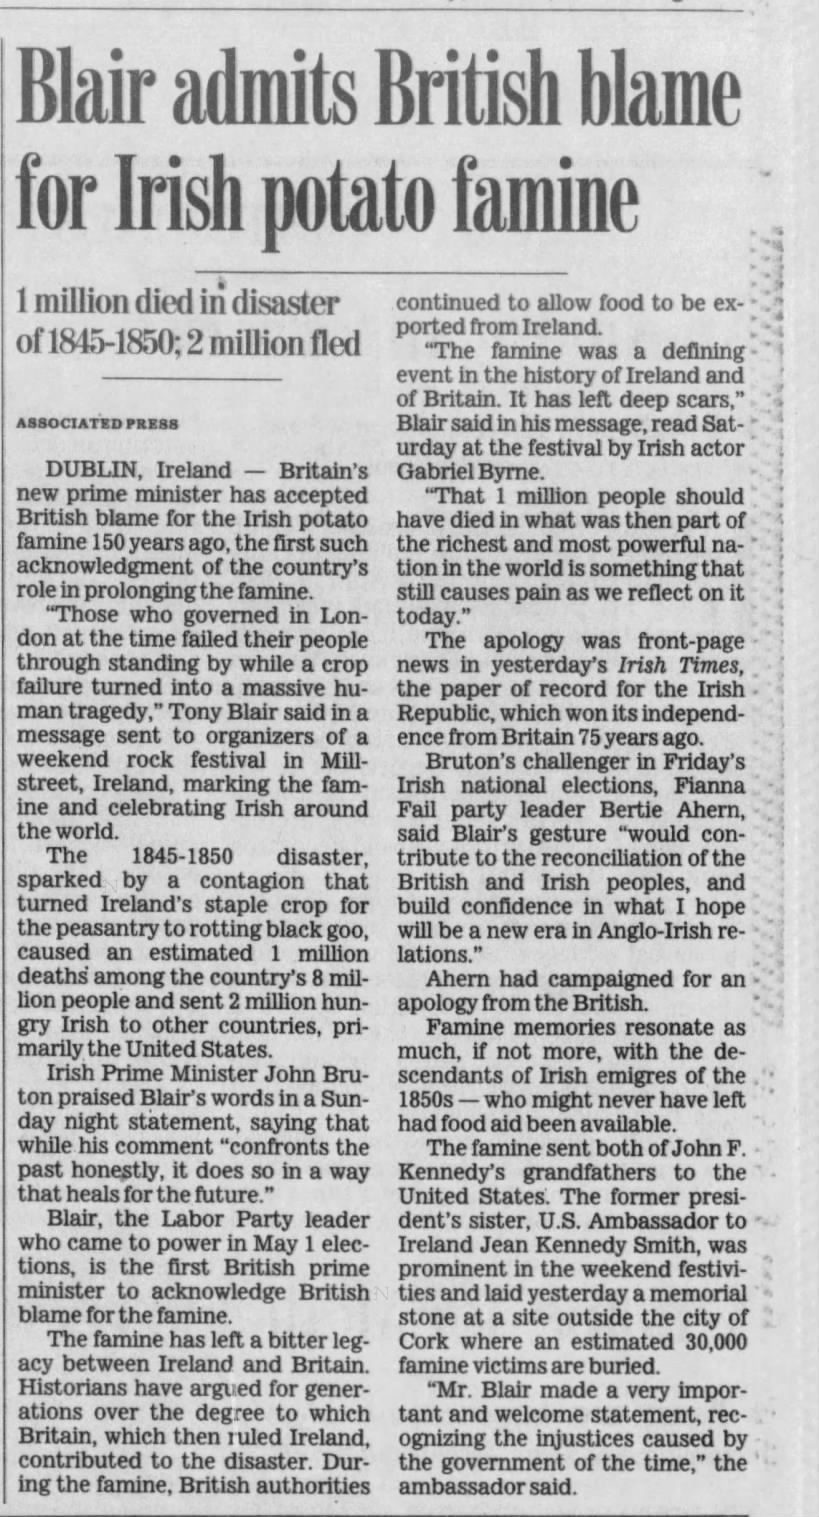 British prime minister admits British blame for Irish Potato Famine in 1997